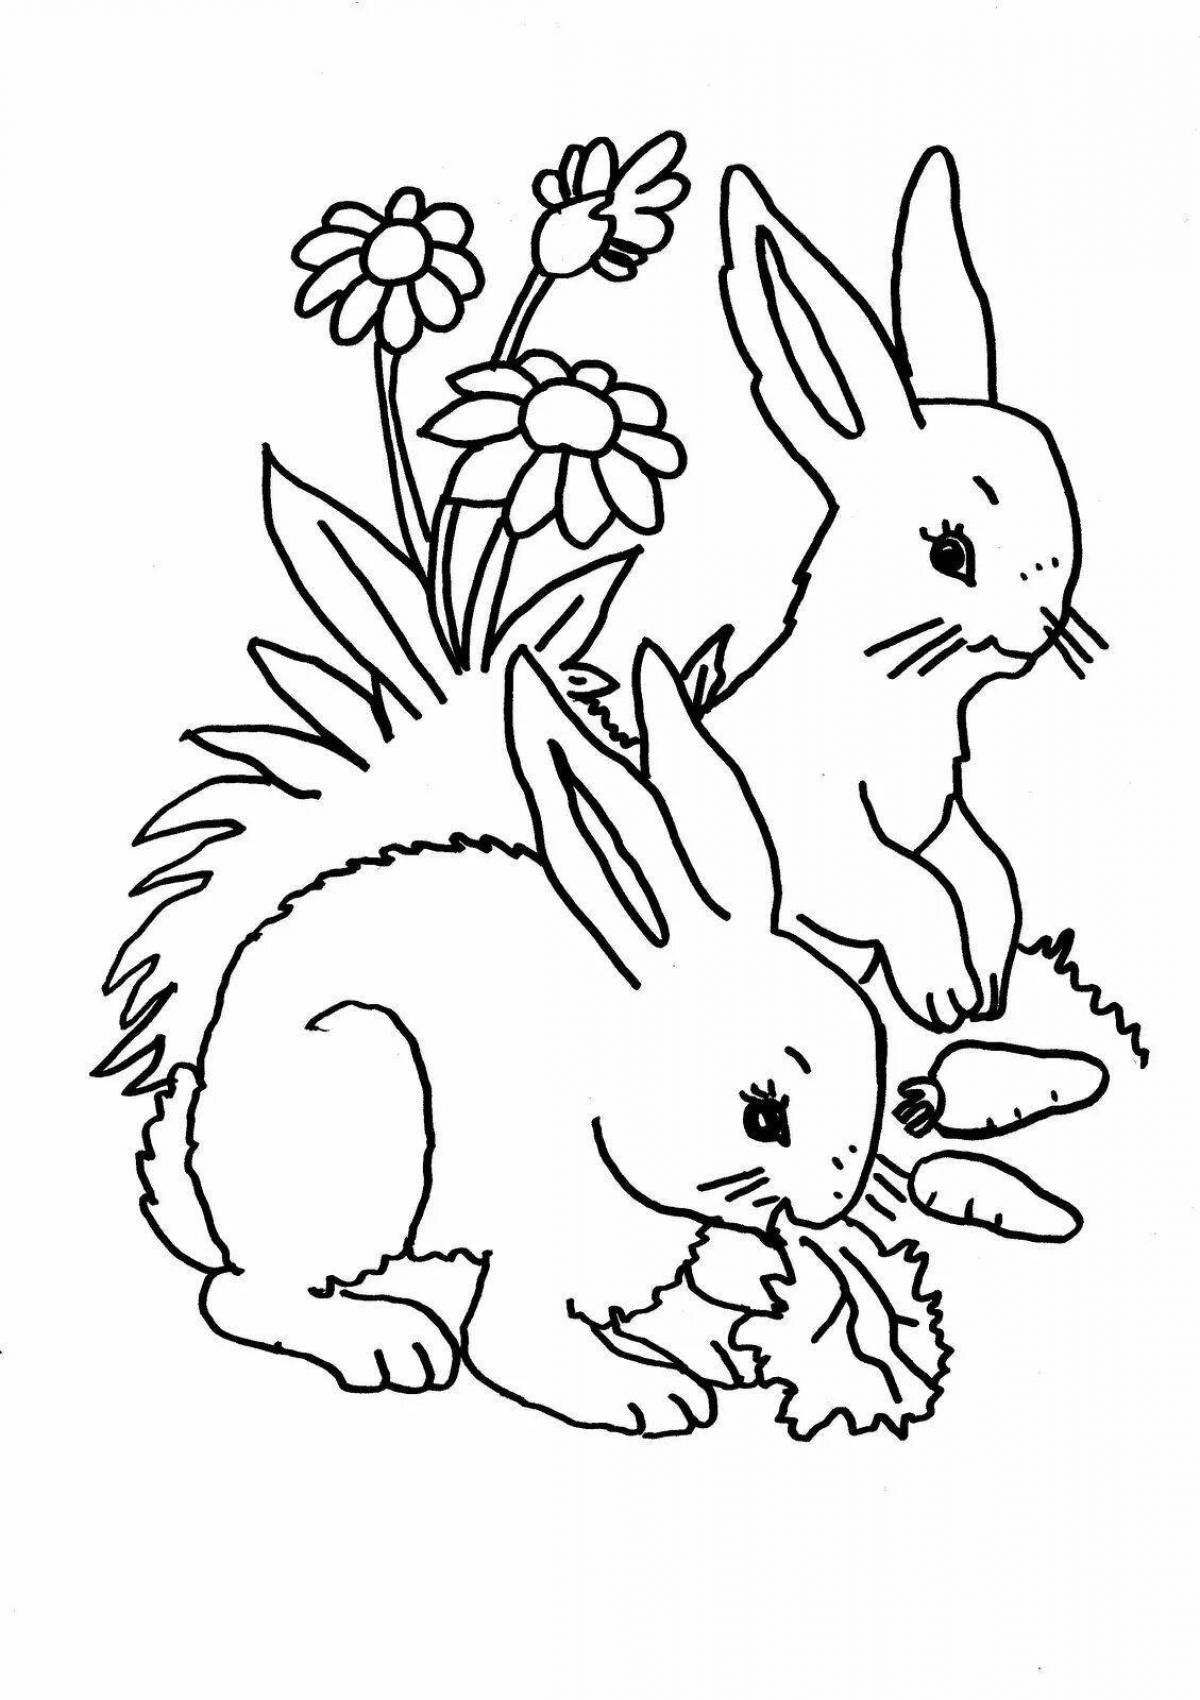 Fancy rabbit coloring